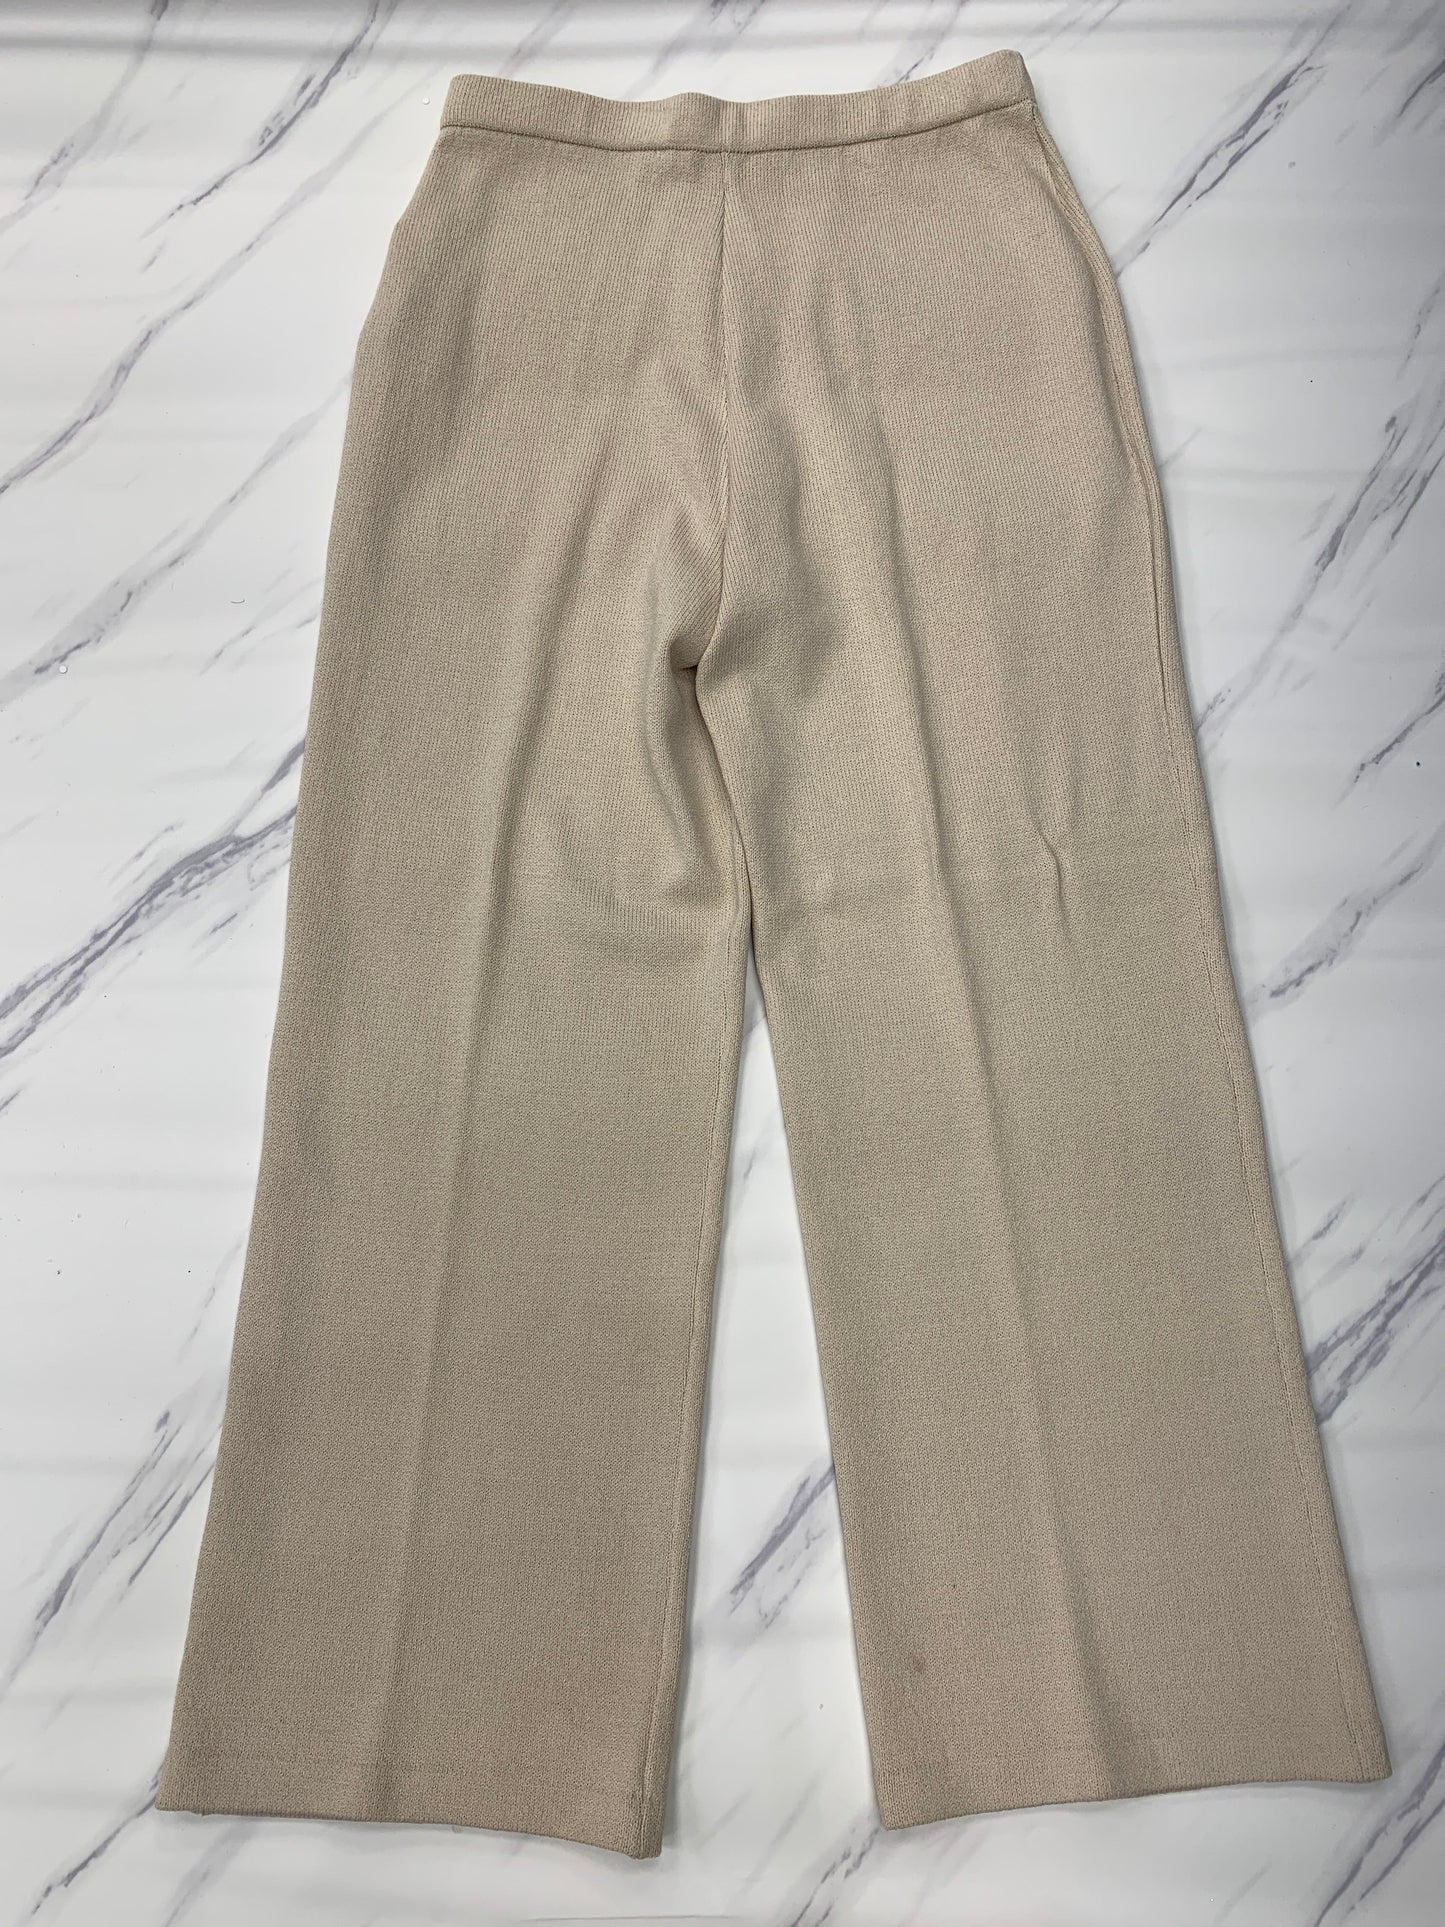 Pants Designer St John Collection, Size 12